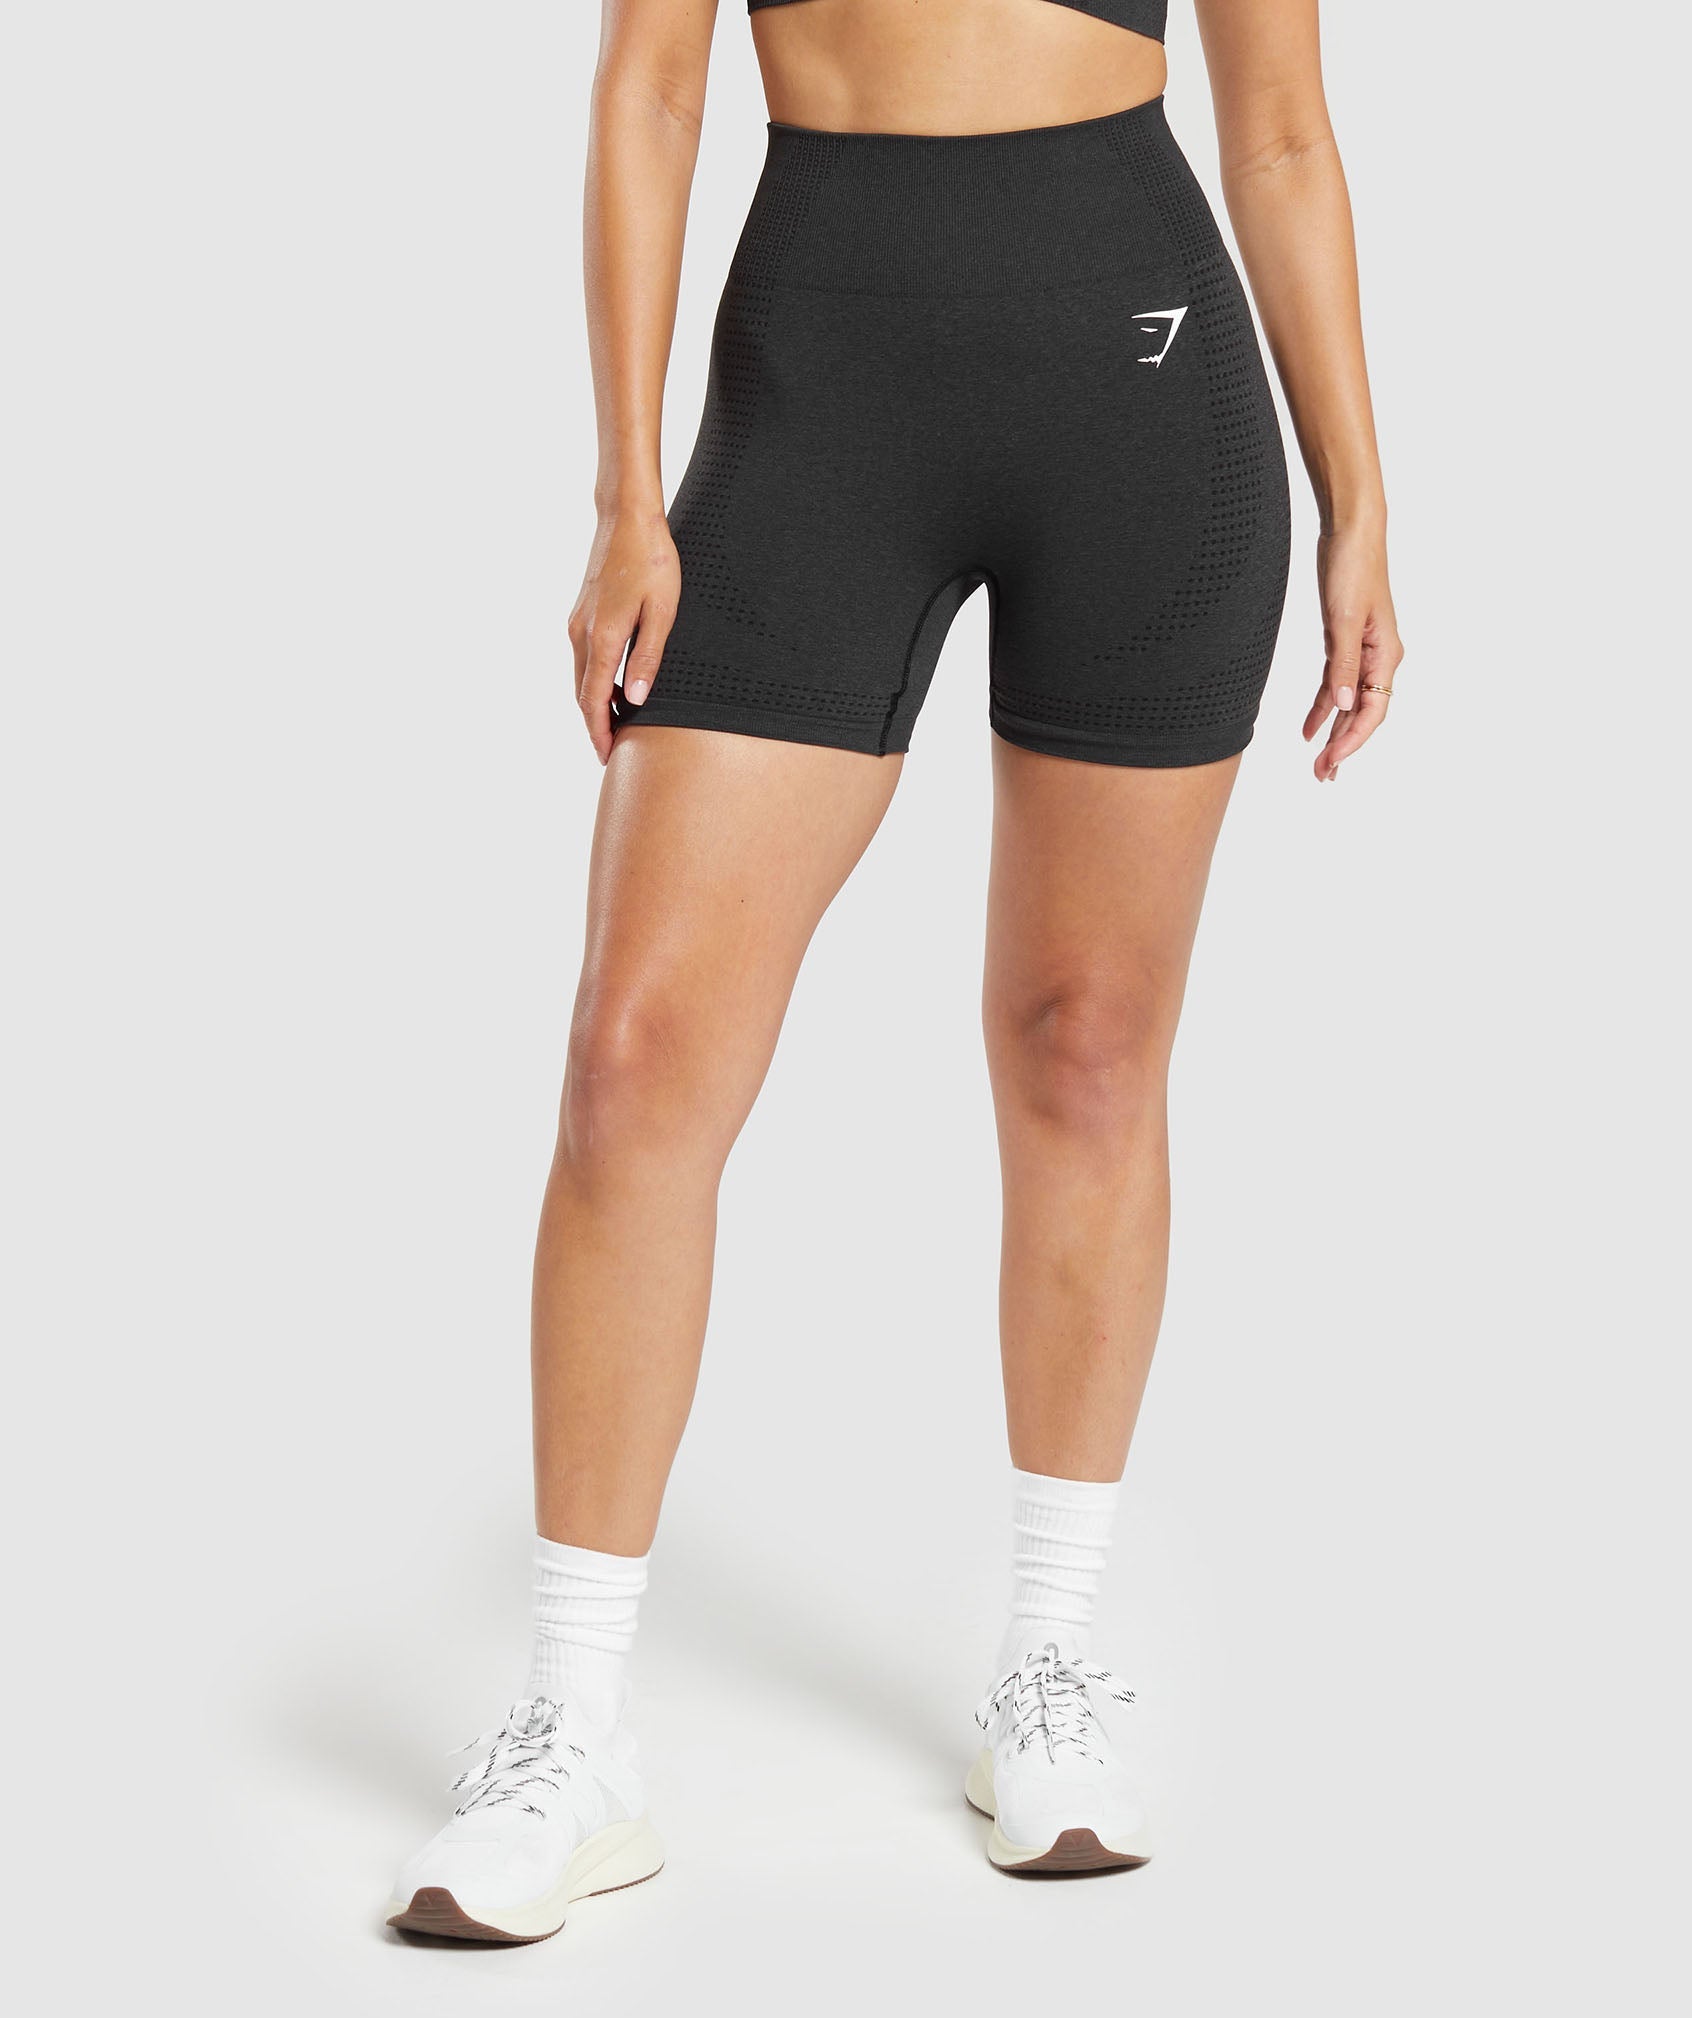 Double Faced Matte Yoga Shorts High Waist Hip Elastic Slim Running Womens  Pants Workout Fitness Hot Pants Biker Tennis Shorts From 15,97 €